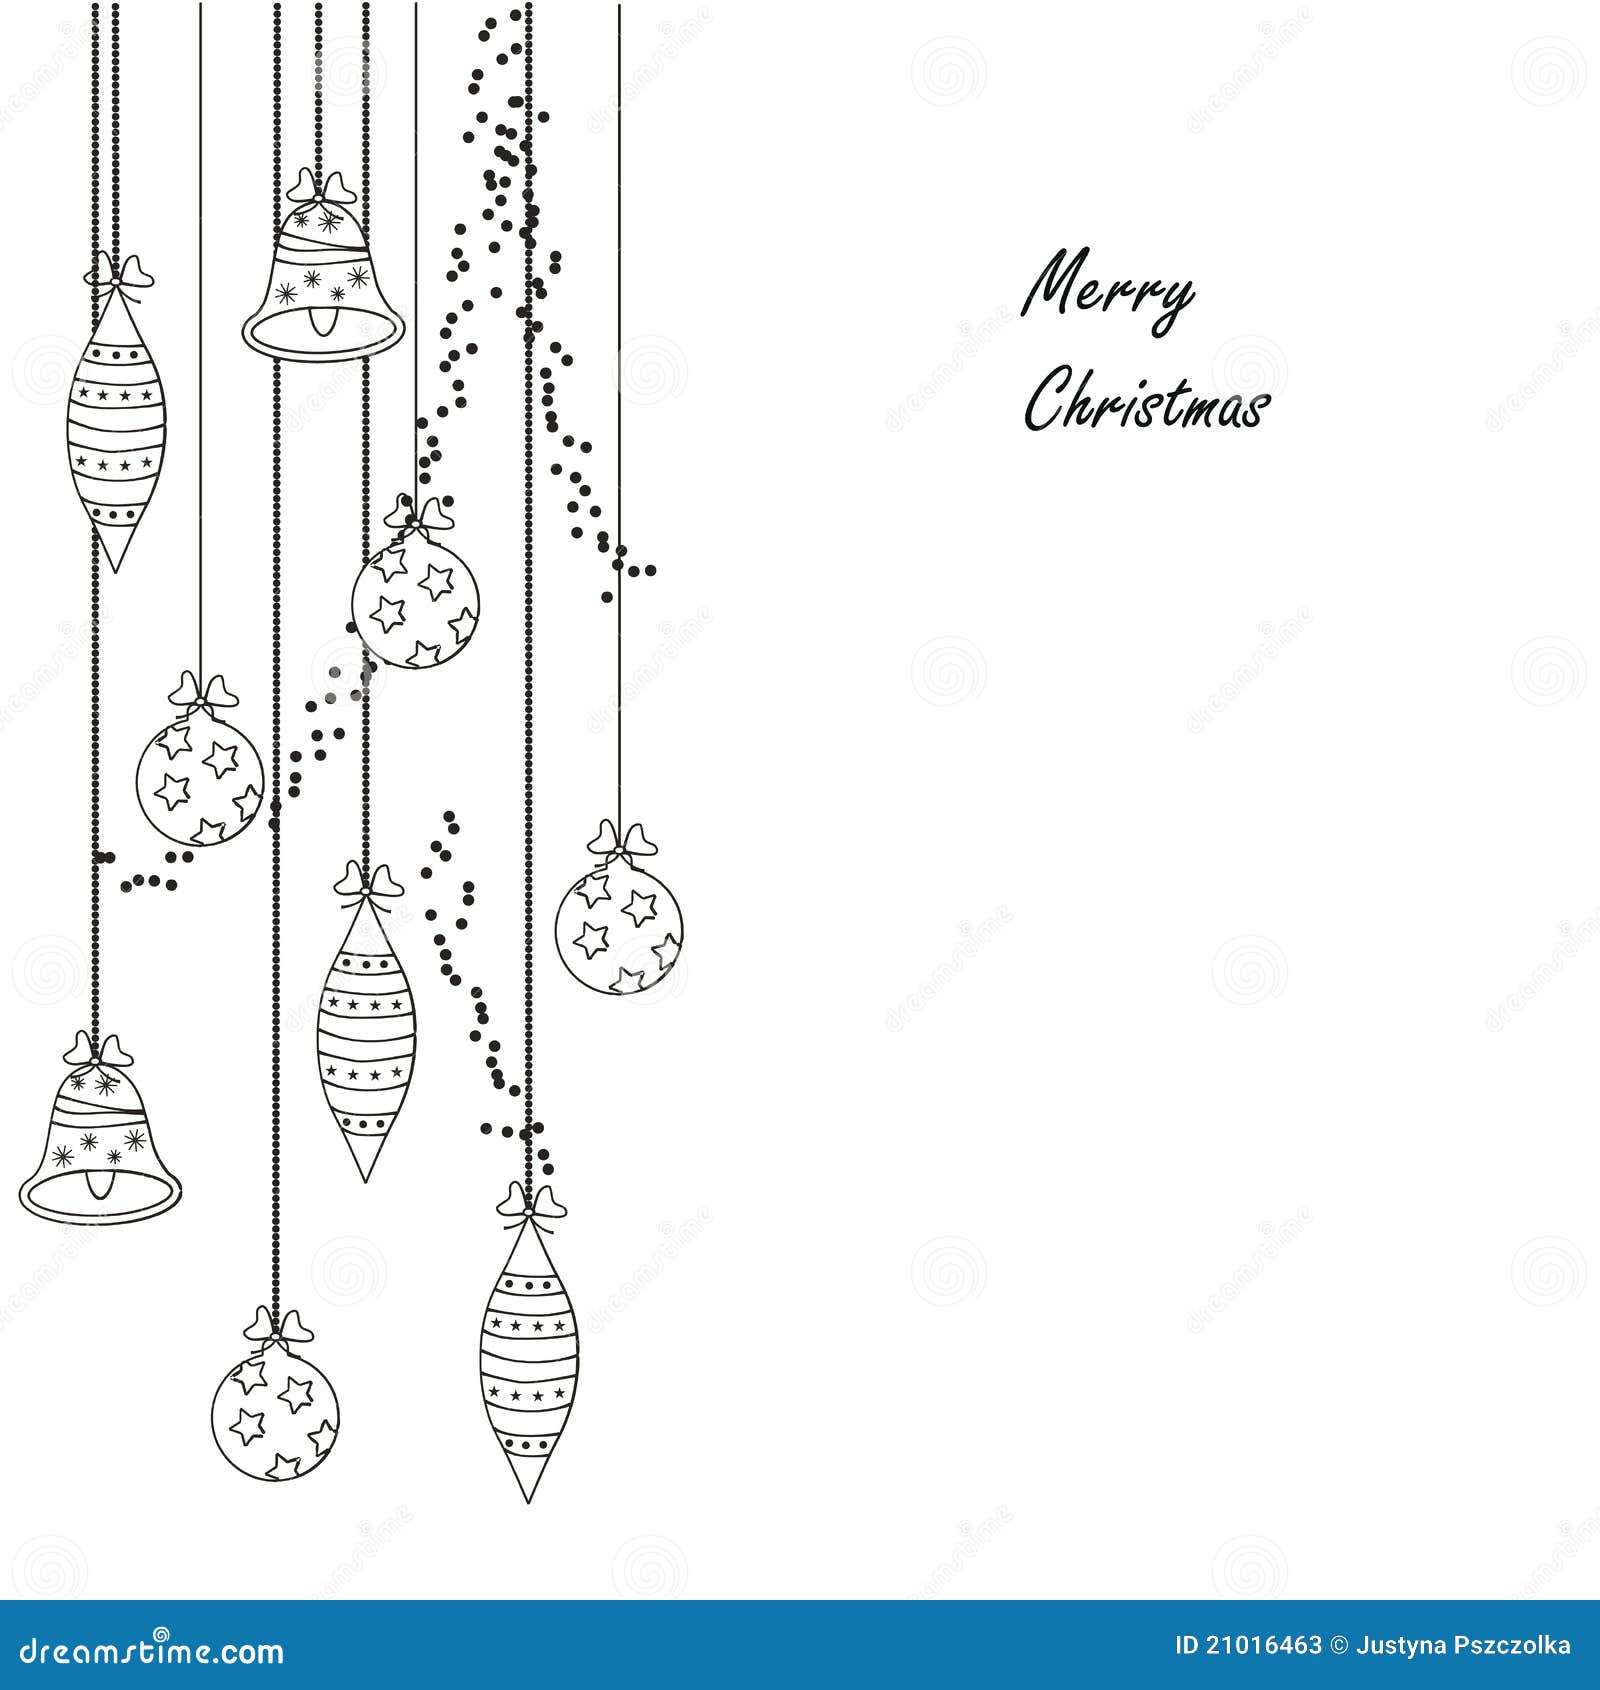 Christmas Background Stock Photos - Image: 21016463